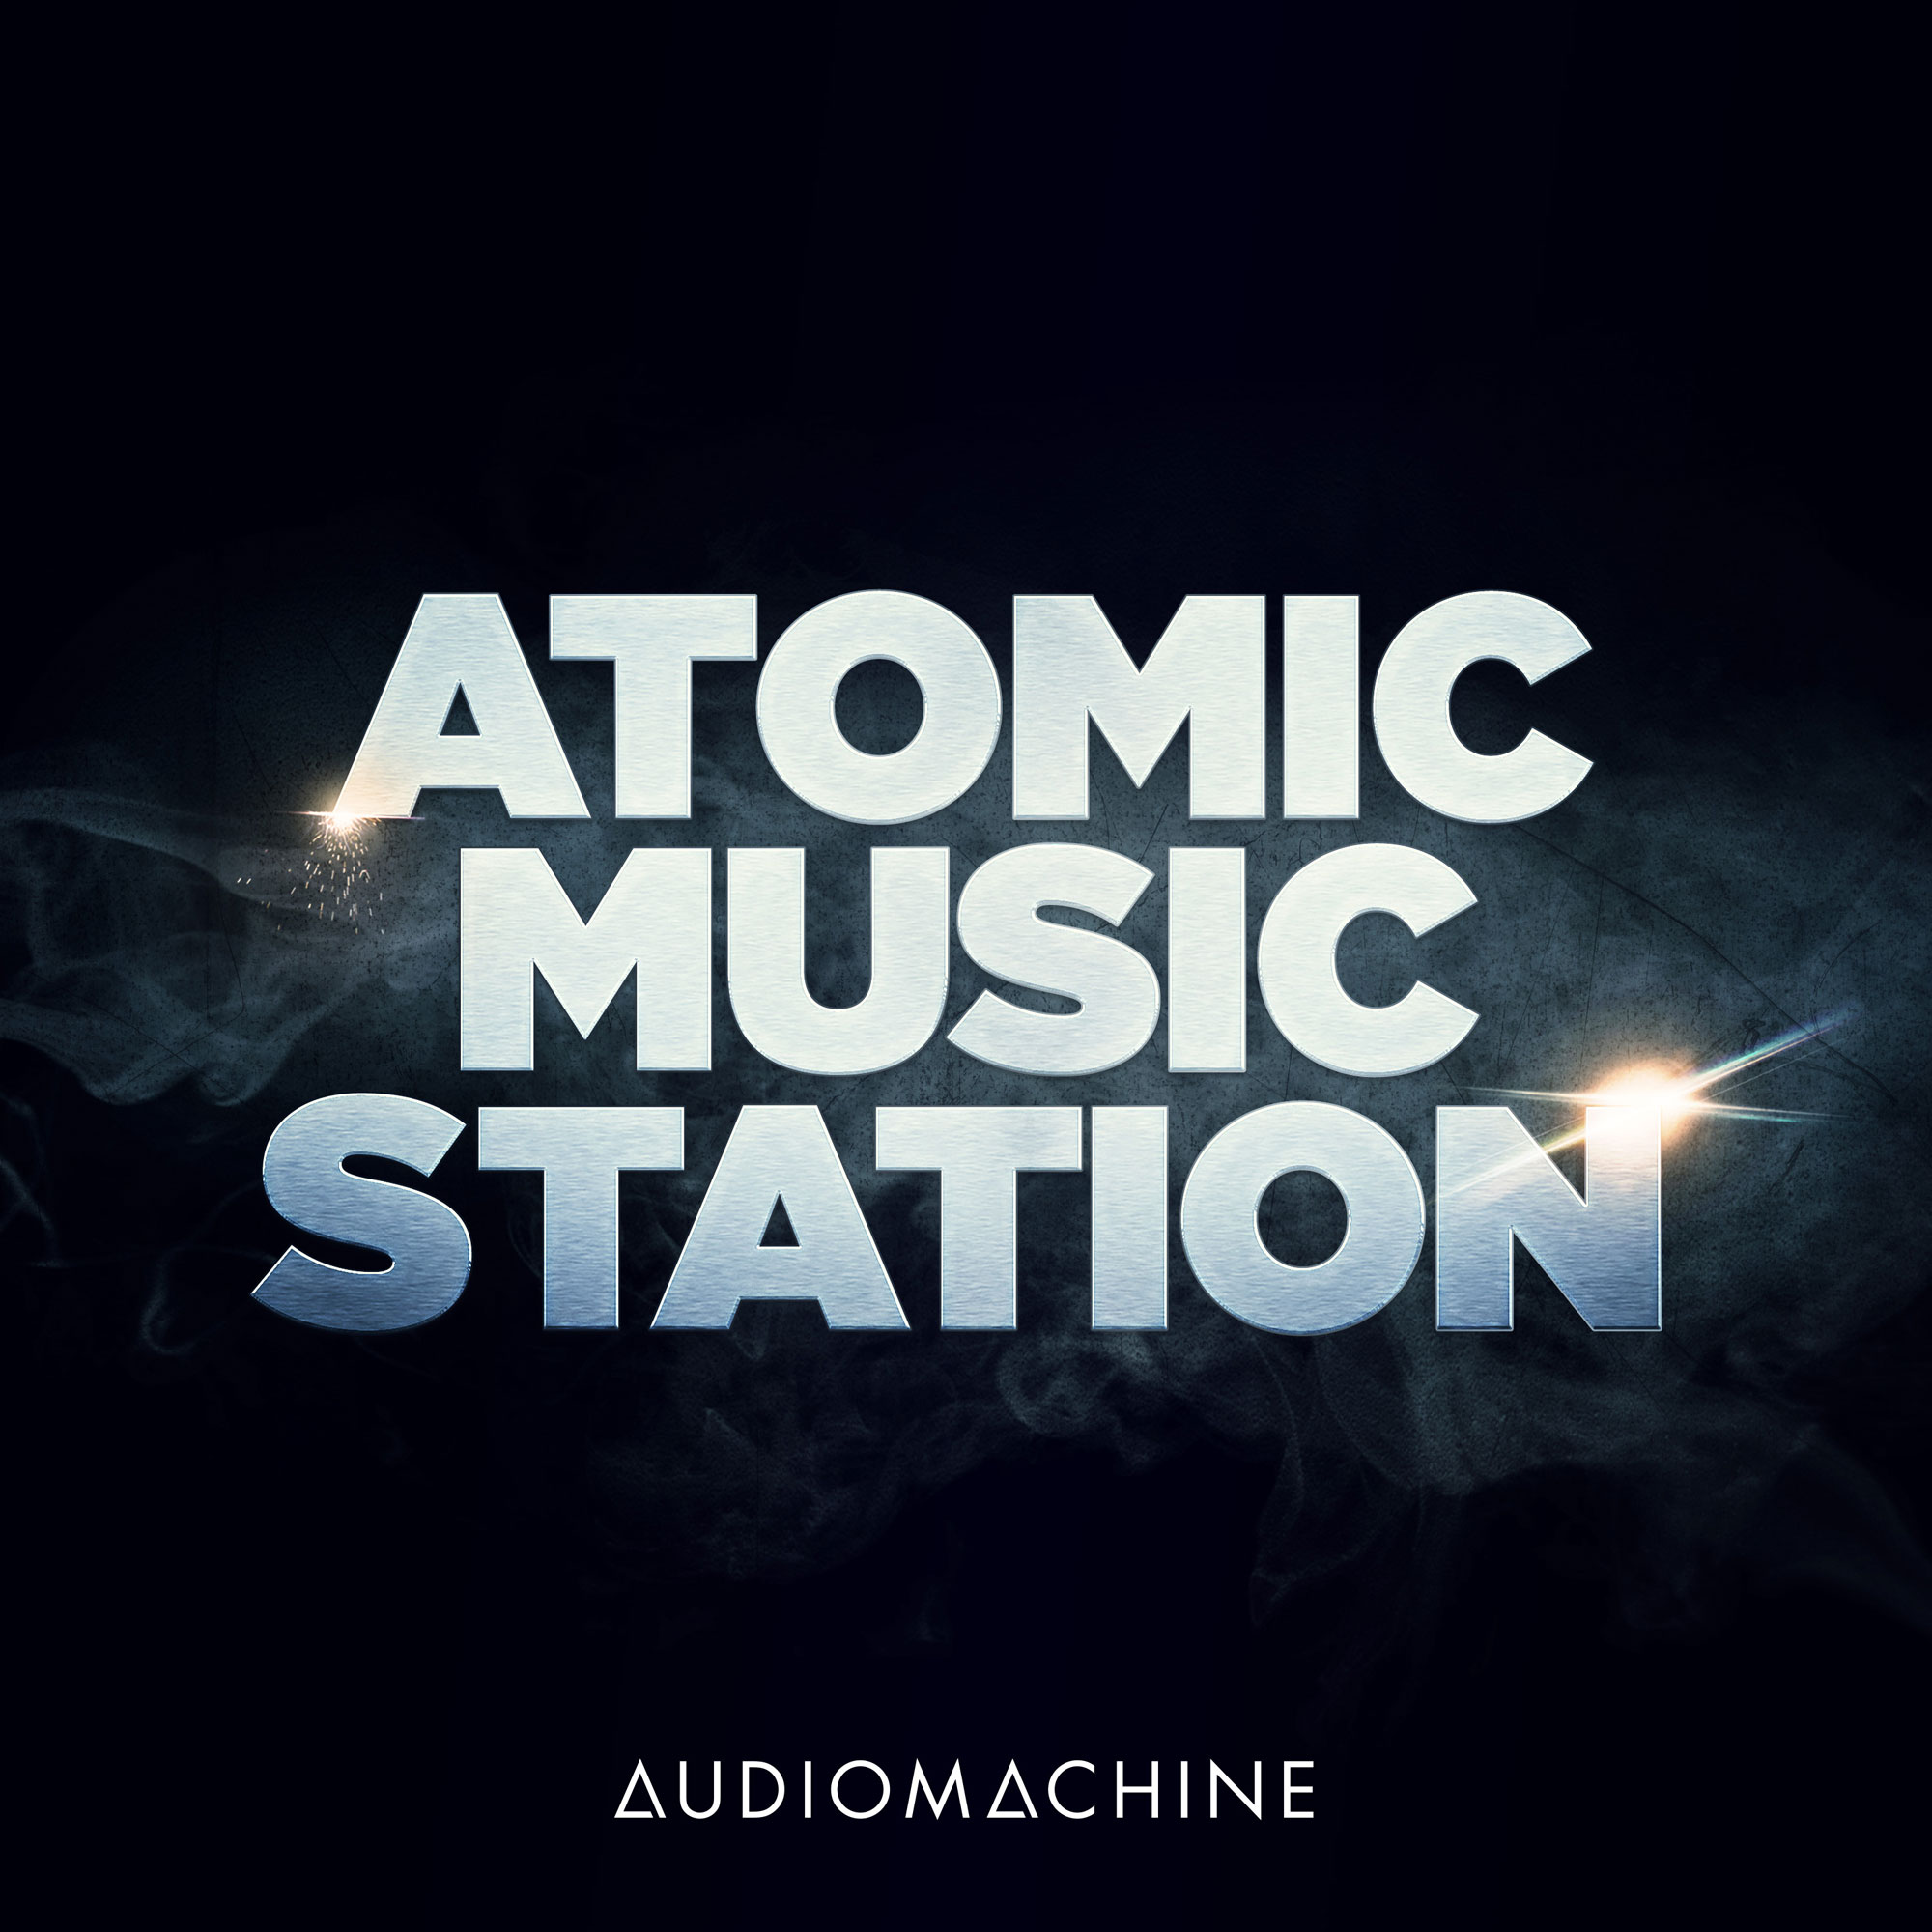 Audiomachine Atomic Music Station cover artwork